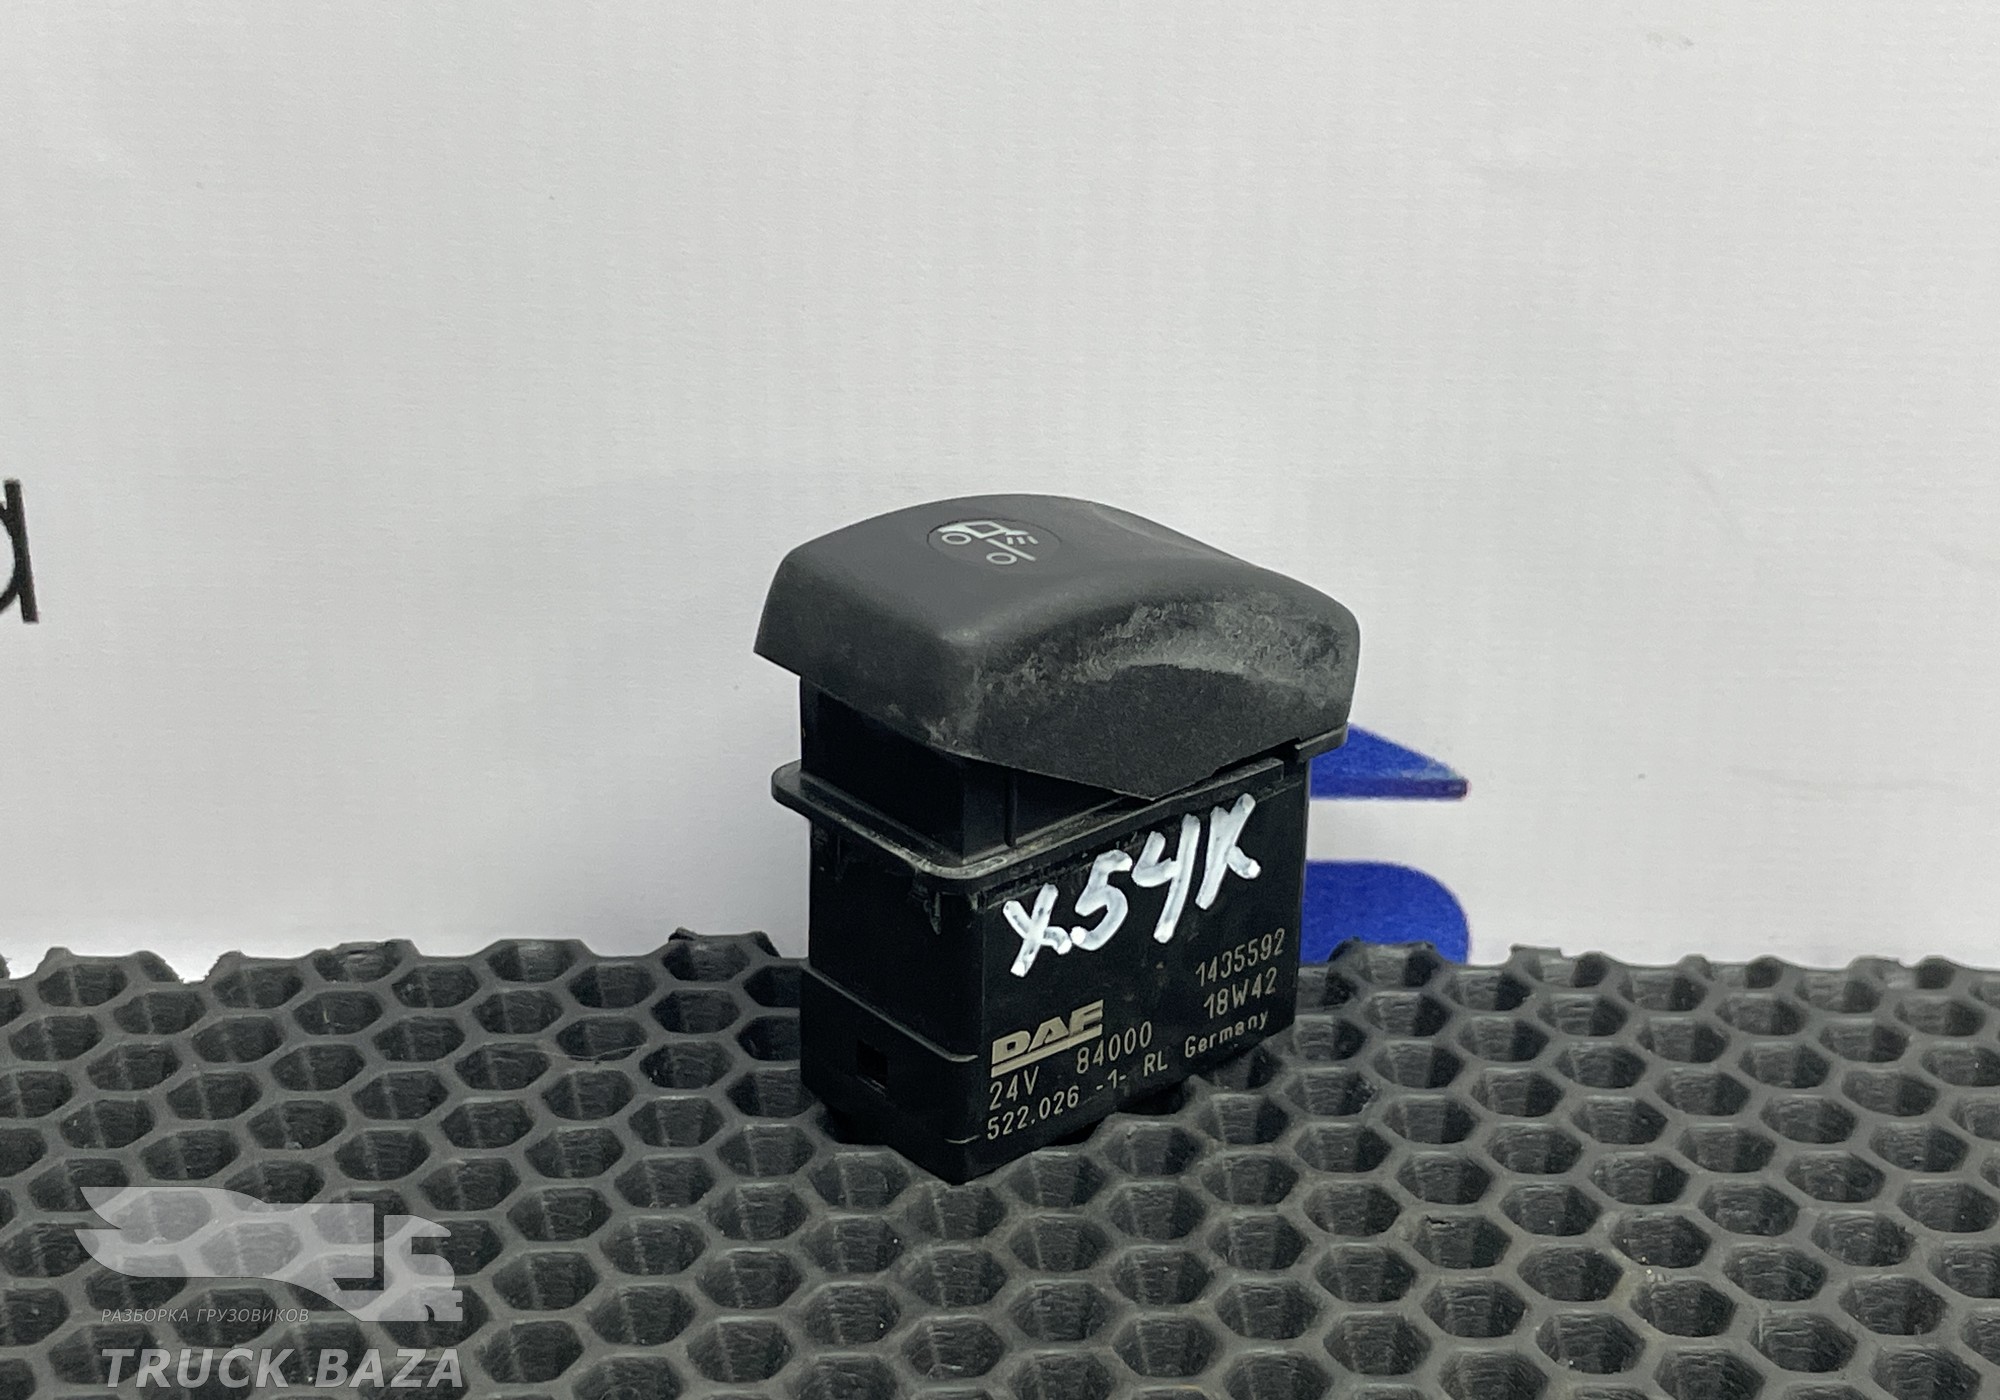 1435592 Кнопка света фар за кабину для Daf XF105